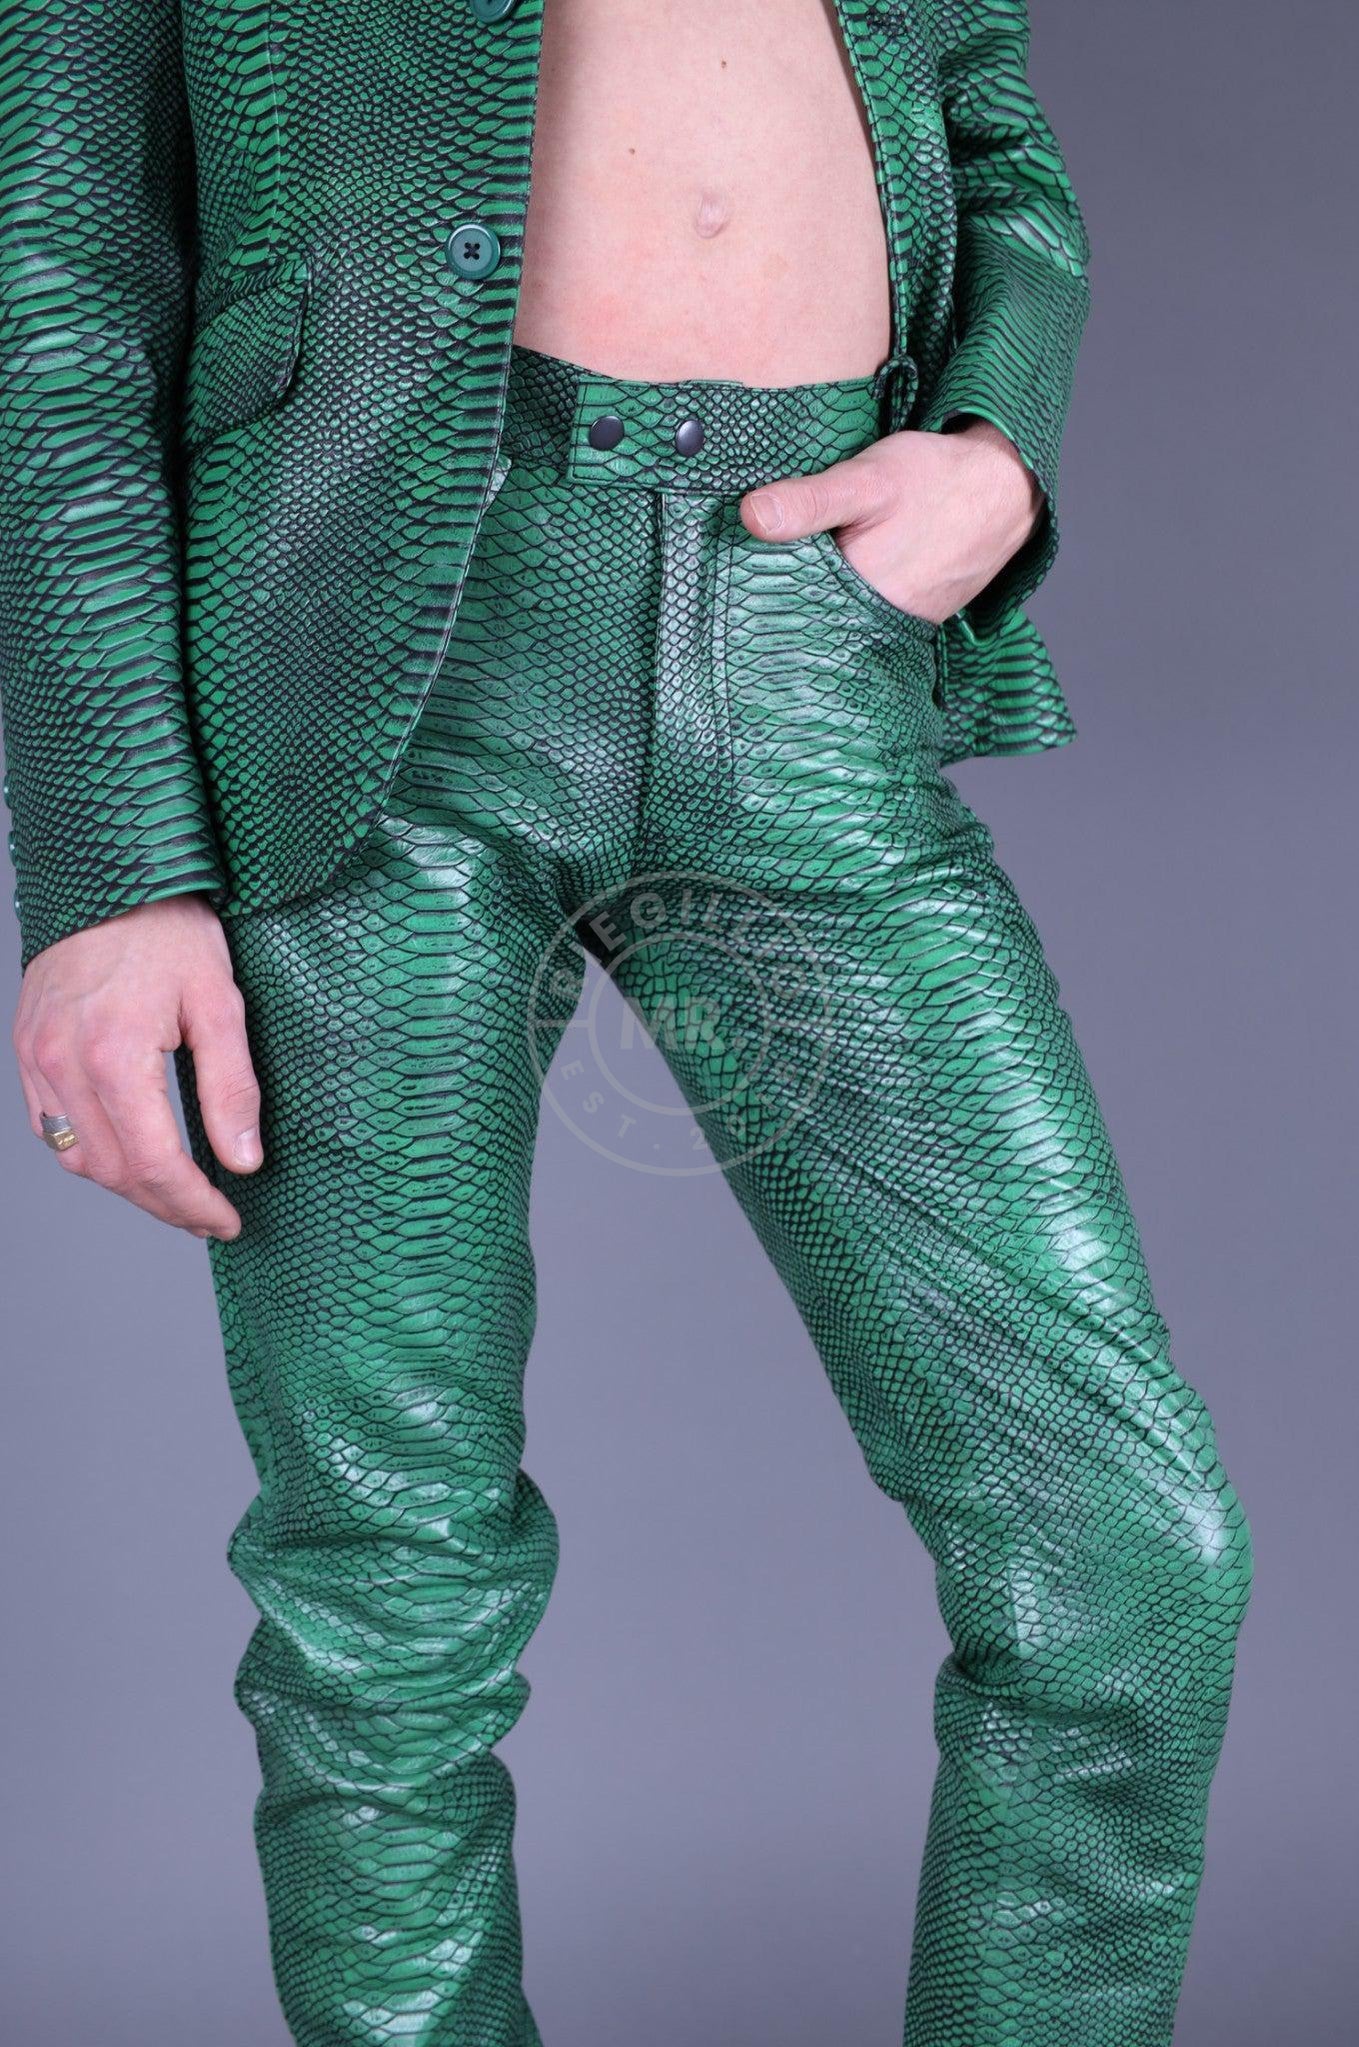 Green Leather Snake Pants at MR. Riegillio